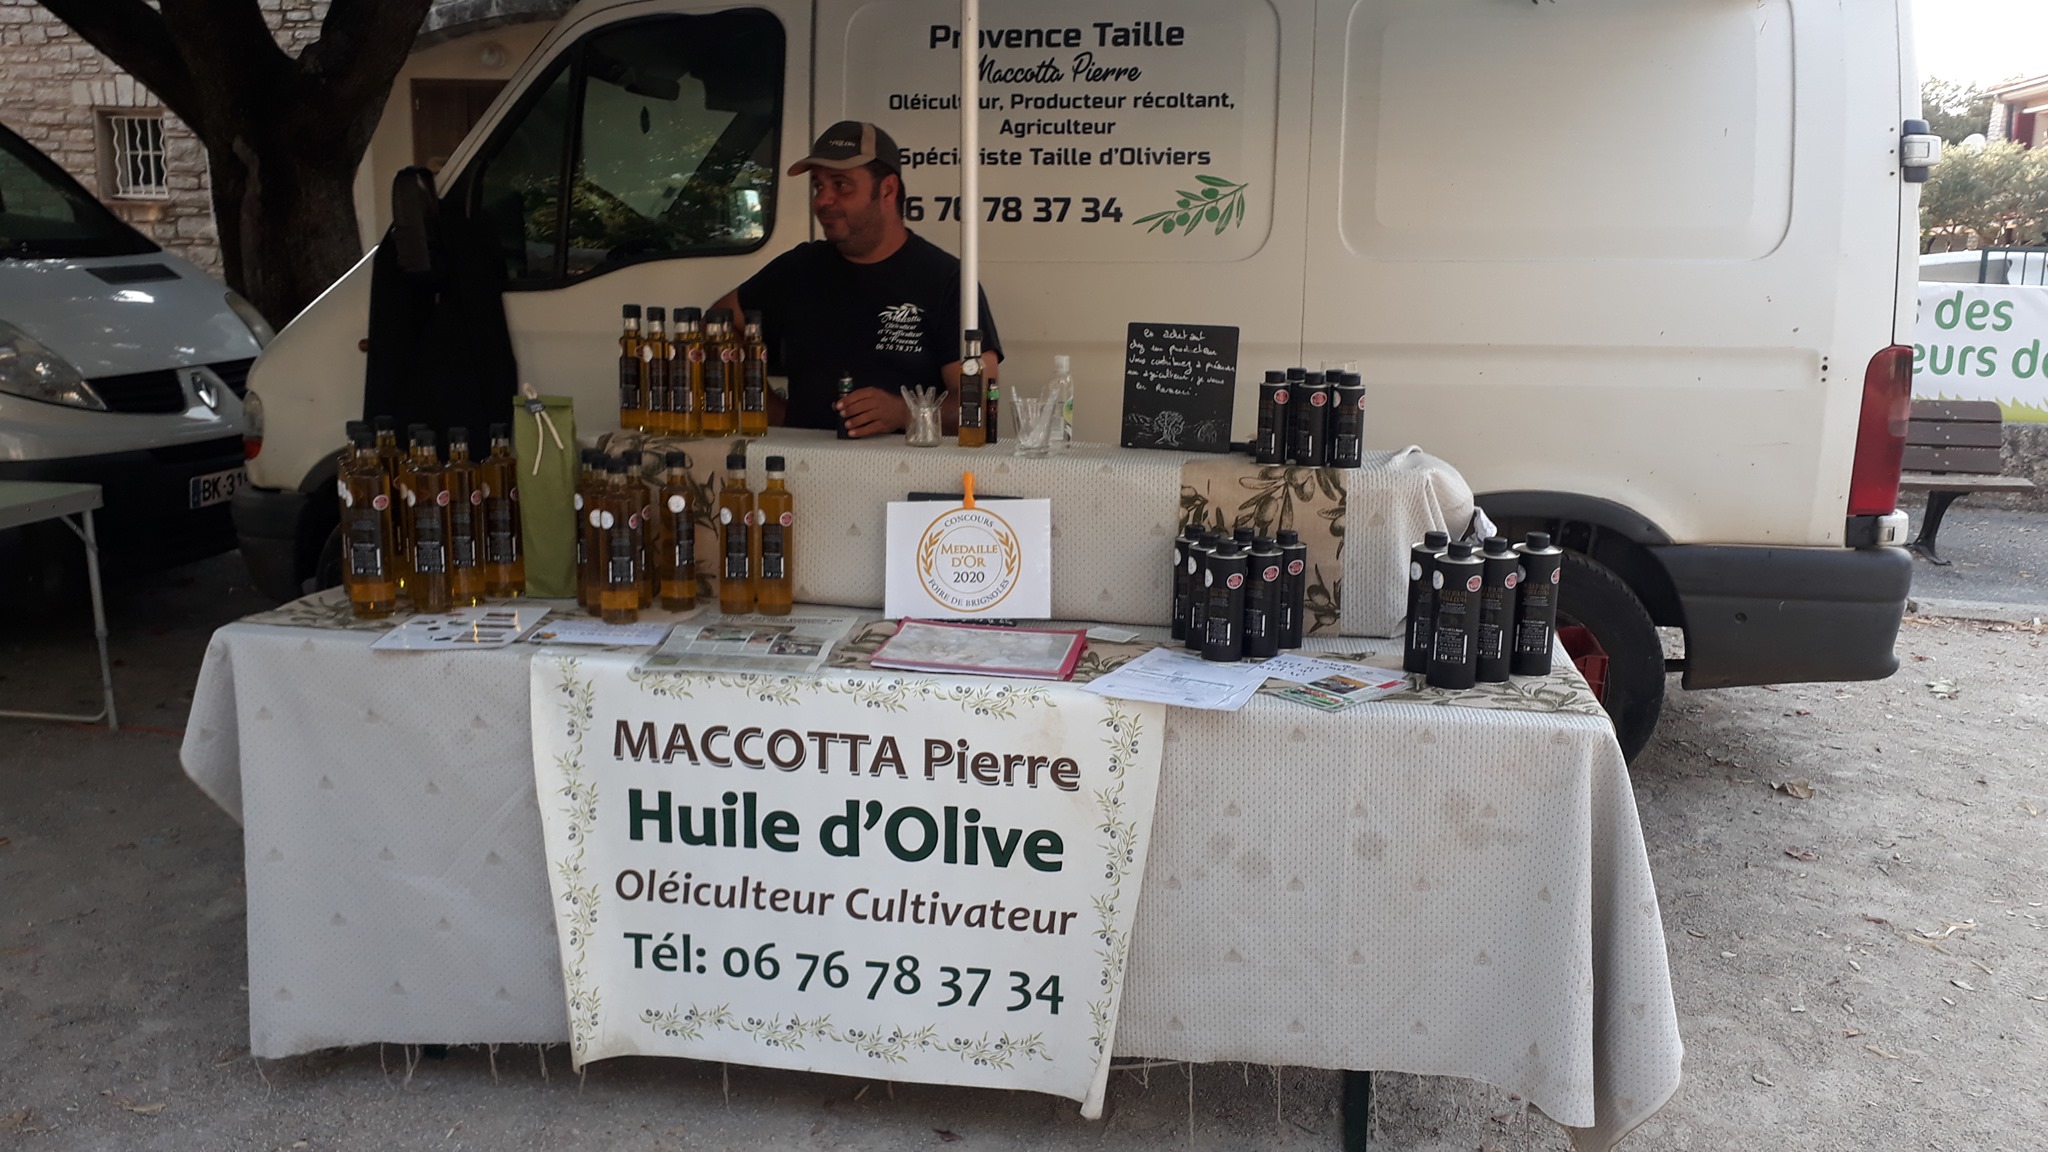 Mr Maccotta oléiculteur et trufficulteur - Provence Taille